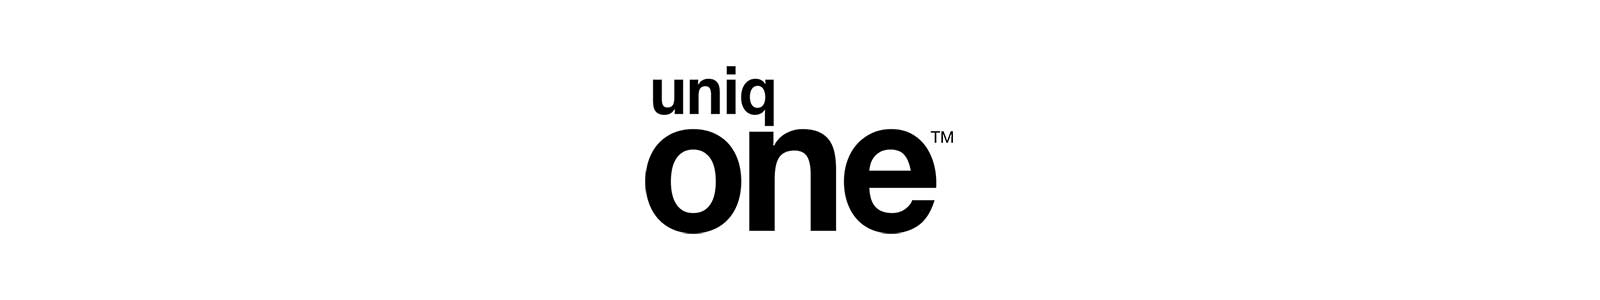 Uniq one